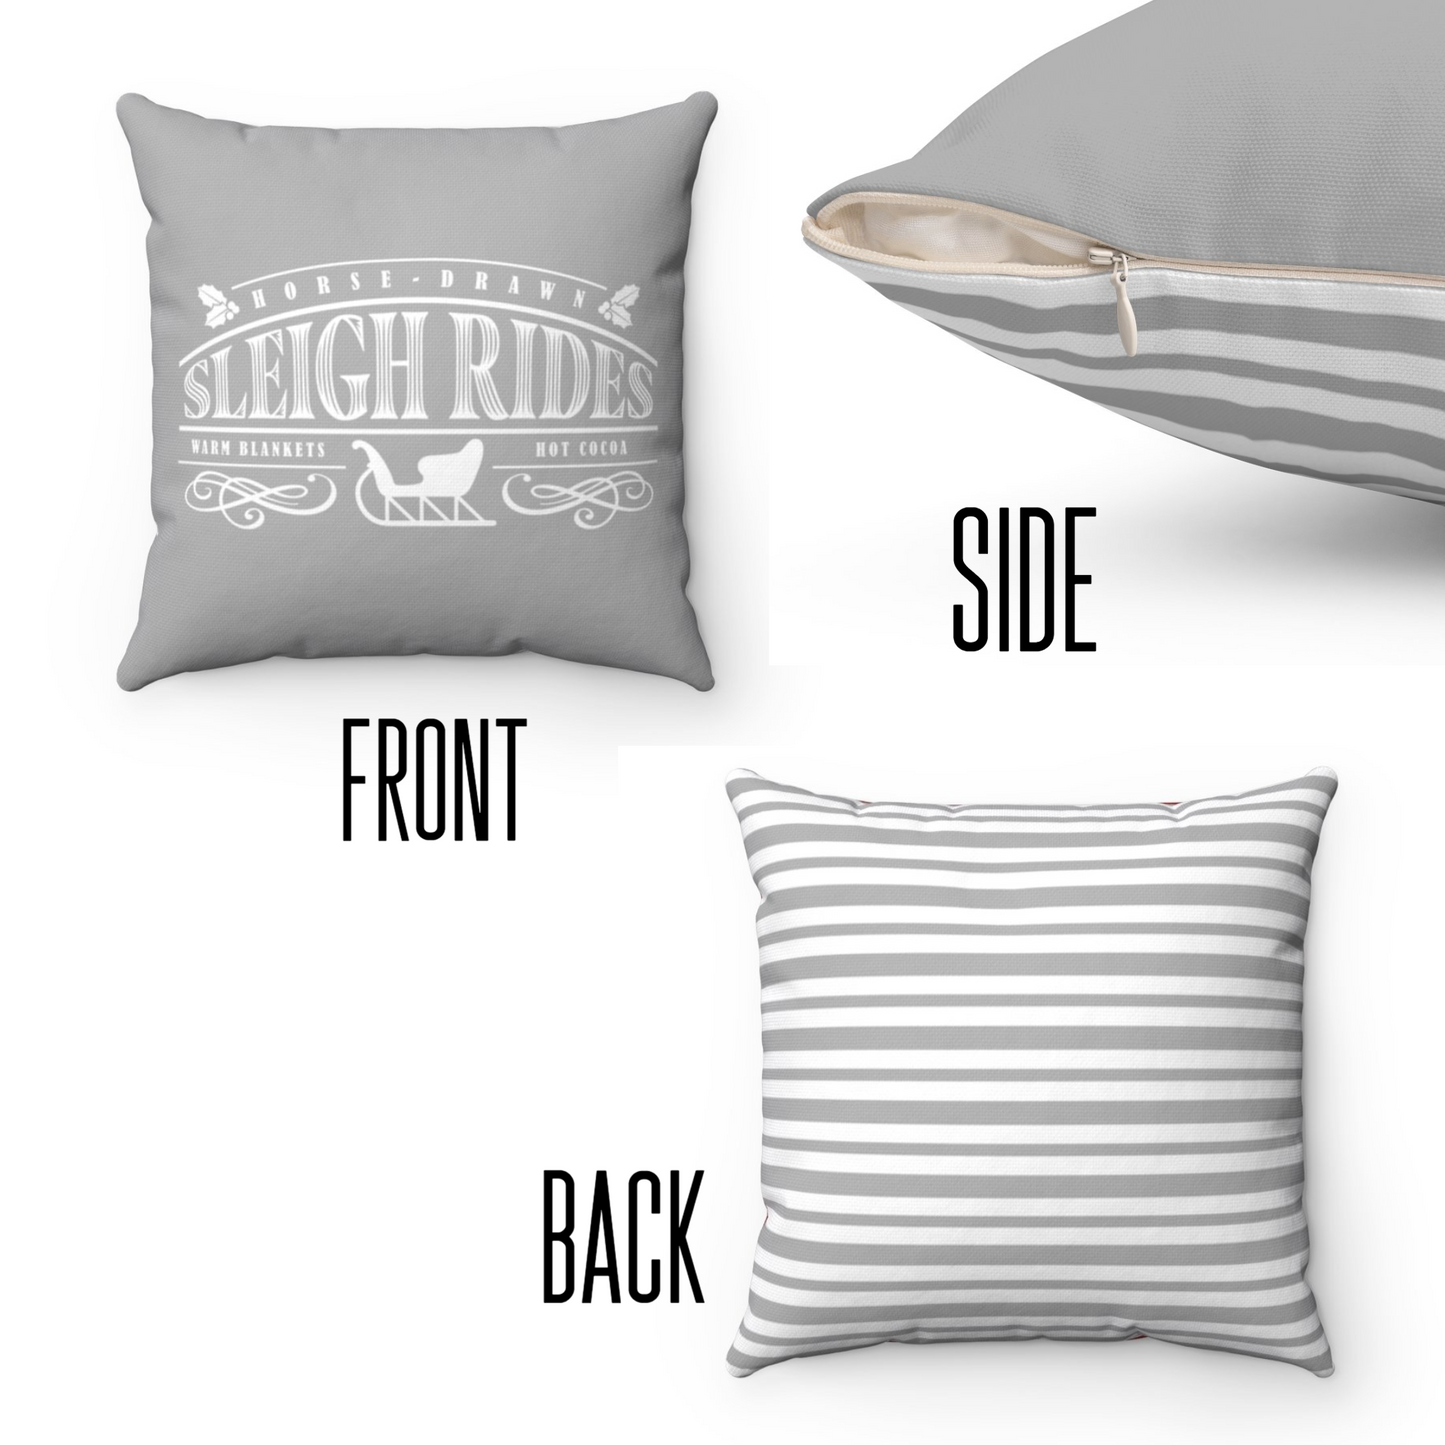 Sleigh Rides Pillow & Insert - Premium Home Decor - Just $28.50! Shop now at Nine Thirty Nine Design